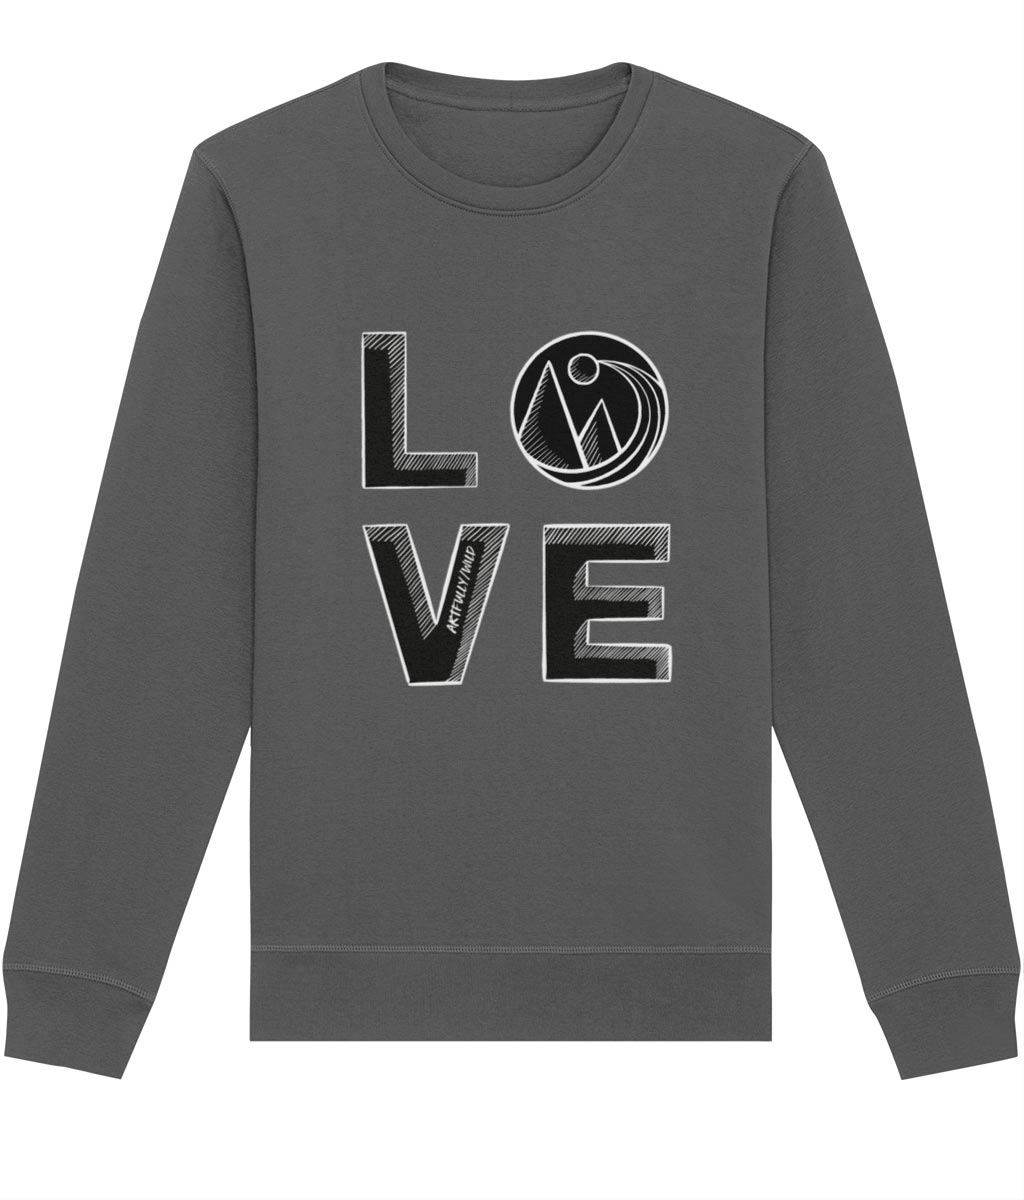 BIG LOVE Organic Dark Grey Crew Neck Sweatshirt. Eco-friendly Clothing. Unisex/Women/Men. Illustration Icon by Artfully/Wild UK.